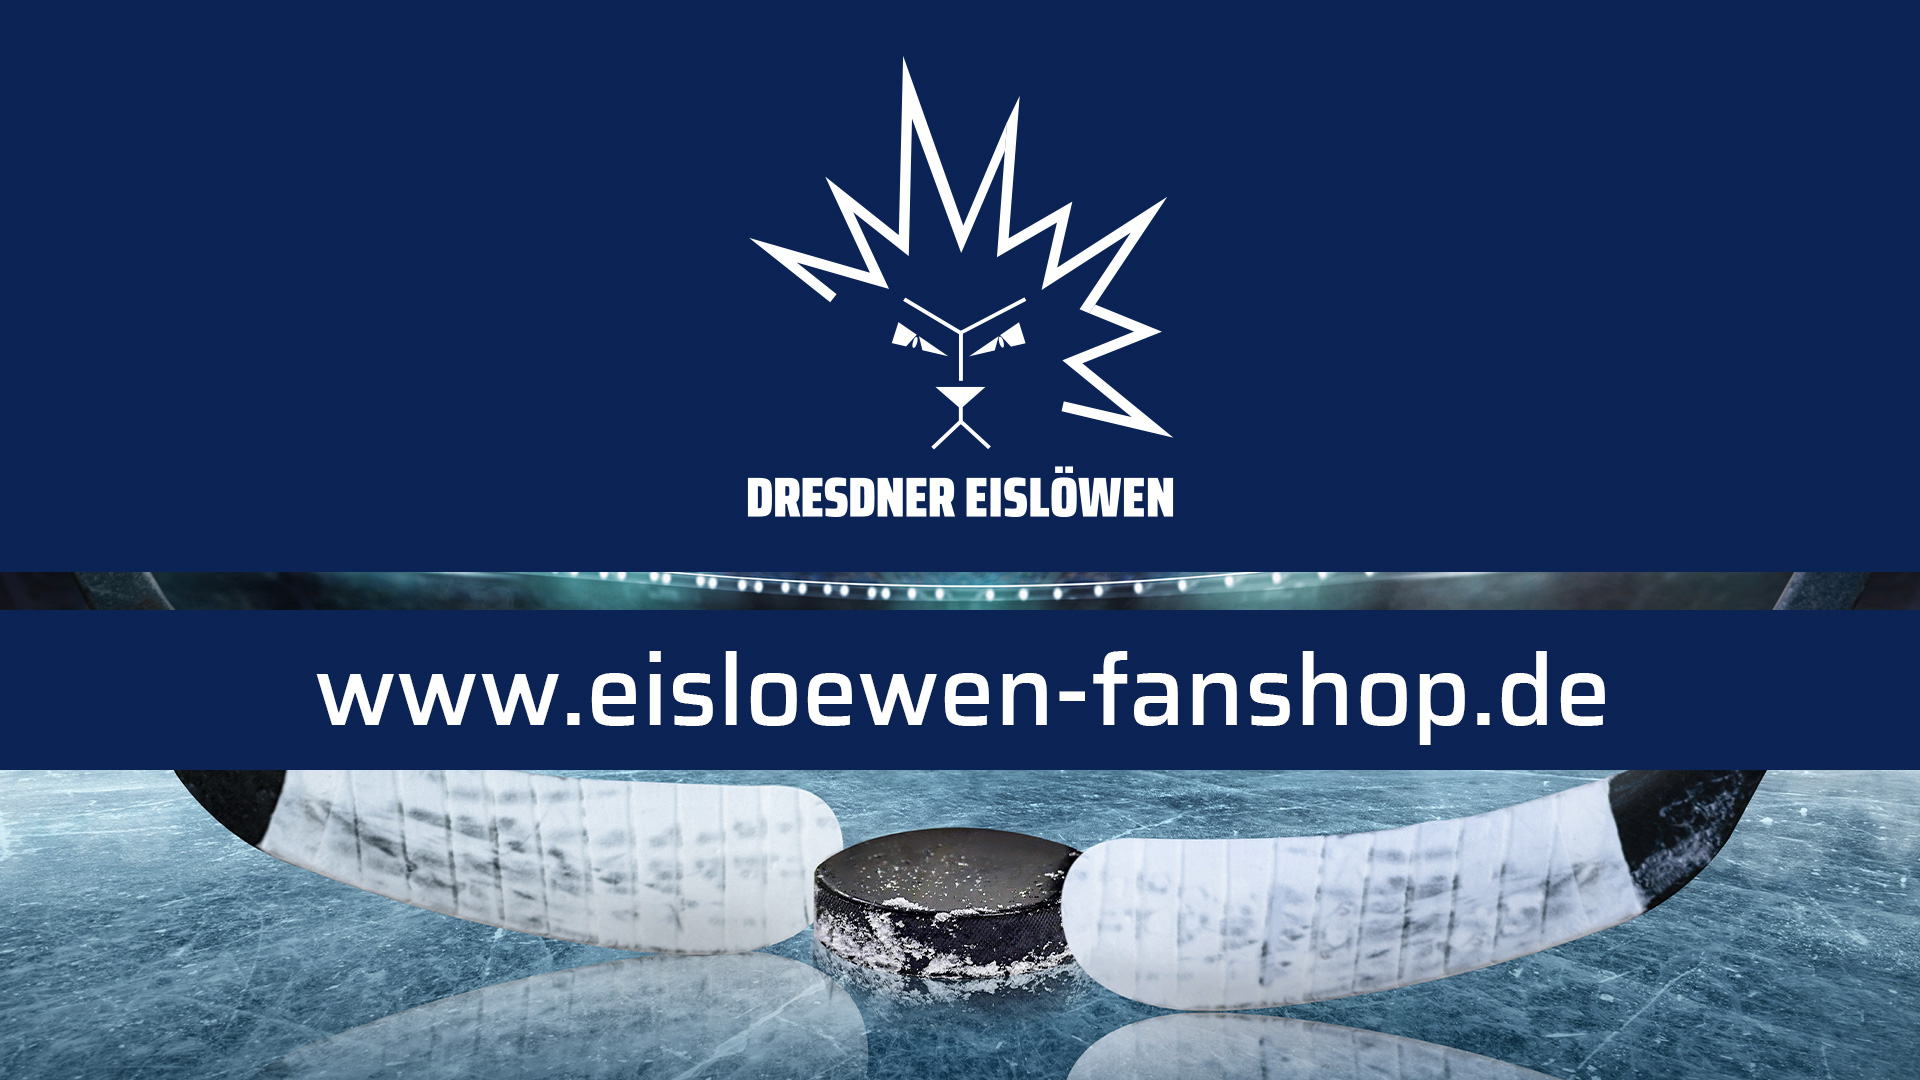 (c) Eisloewen-fanshop.de